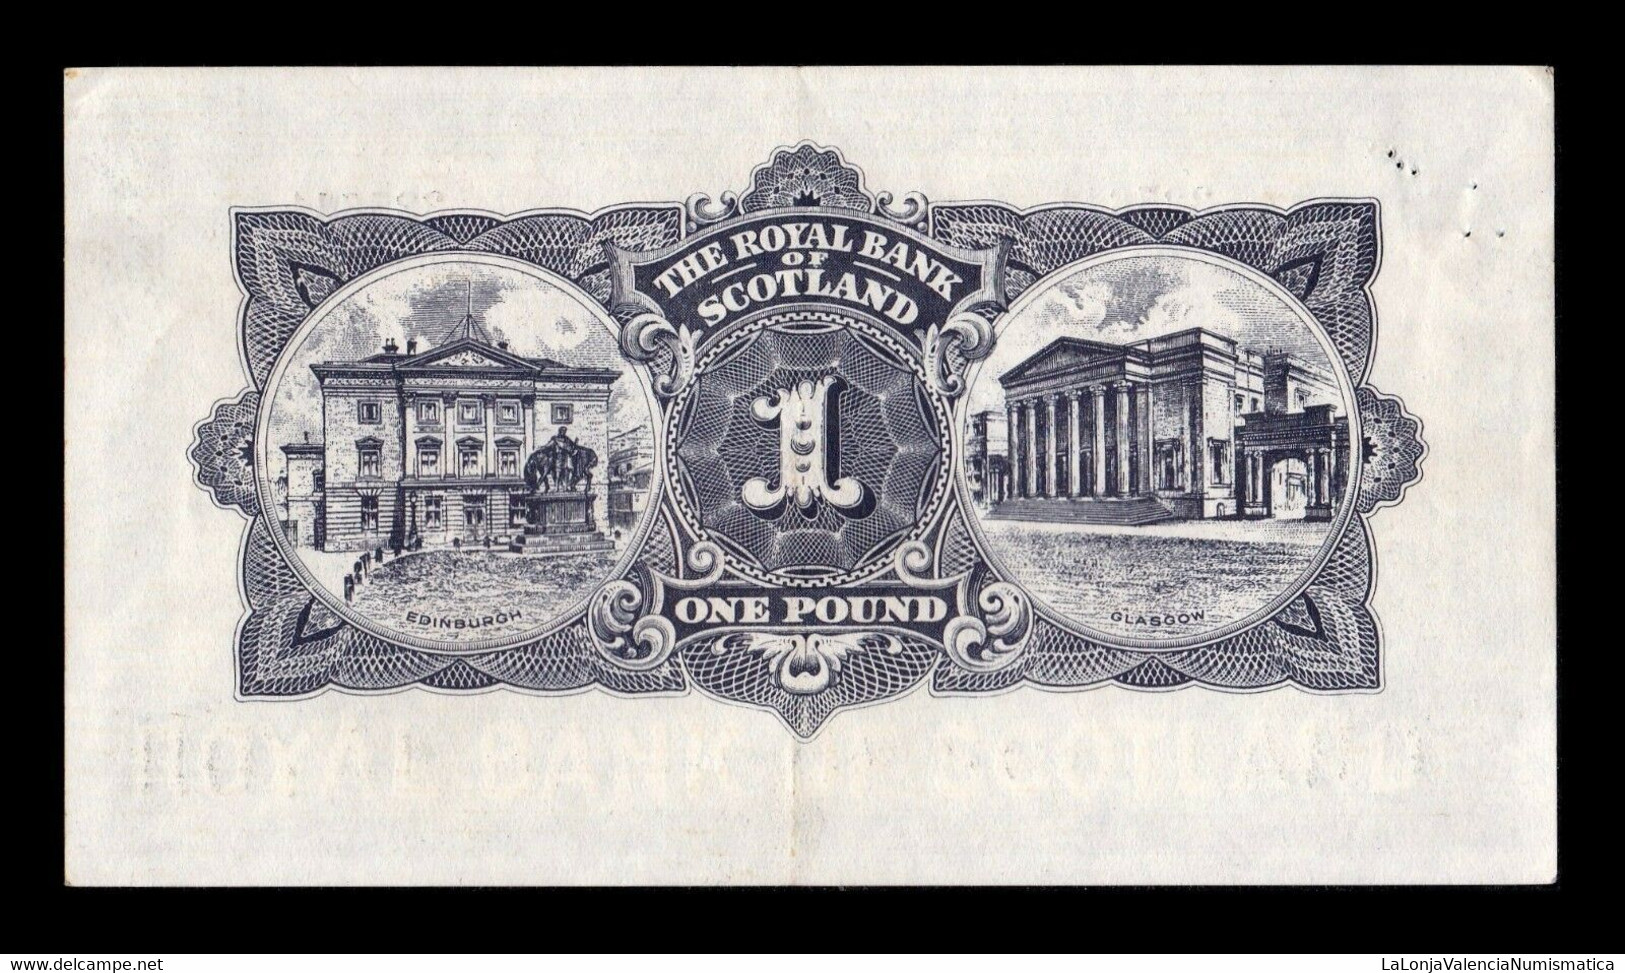 Escocia Scotland 1 Pound Royal Bank Of Scotland 1956 Pick 324b EBC XF - 1 Pound